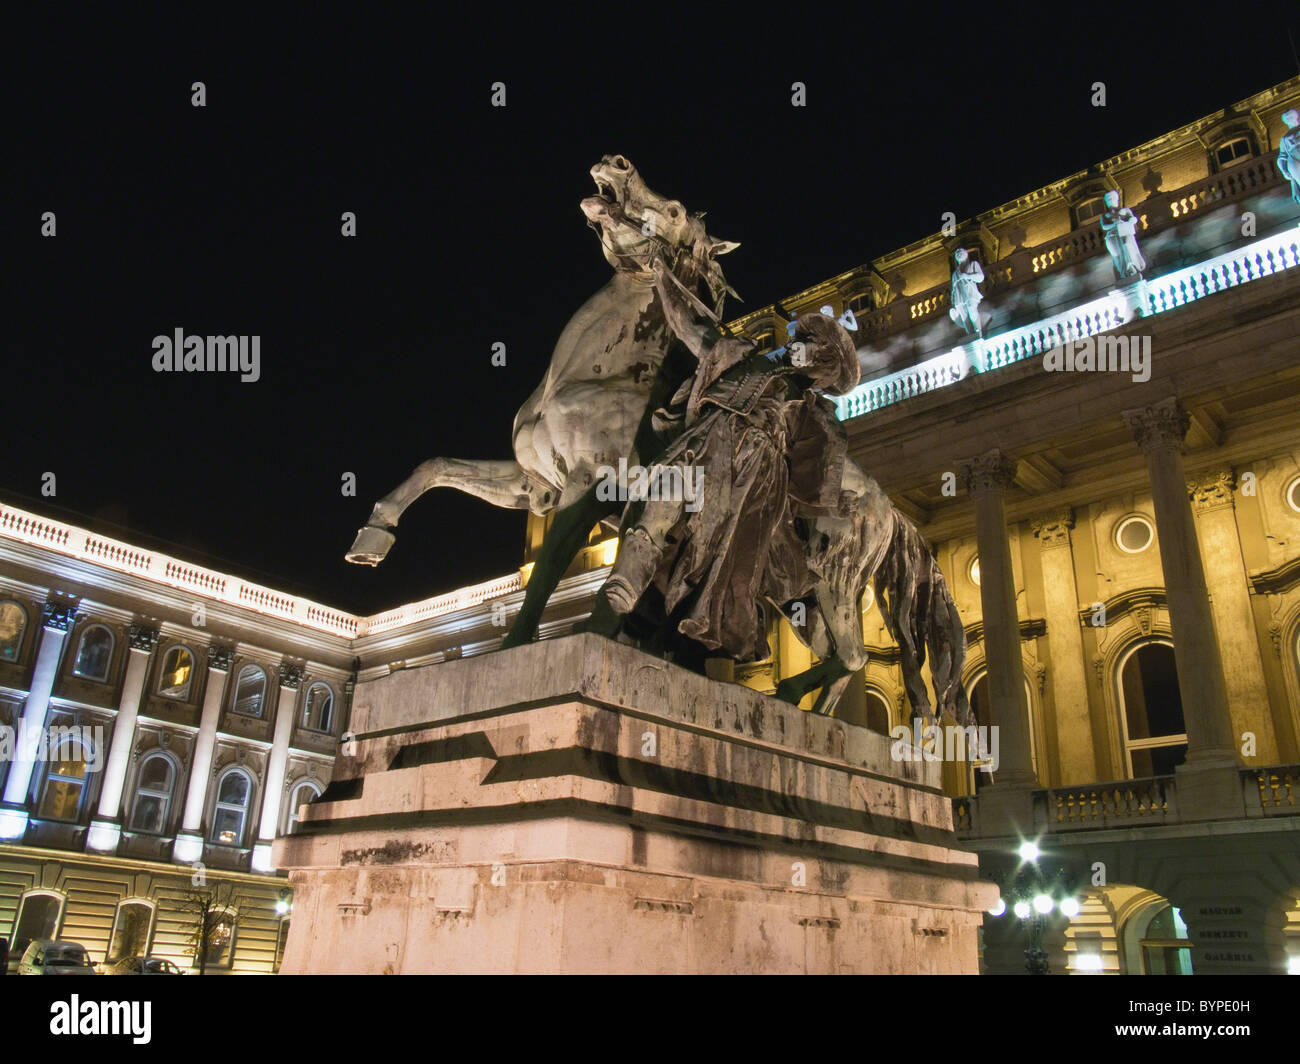 Csikos Statue at Night, Royal Palace, Budapest, Hungary Stock Photo